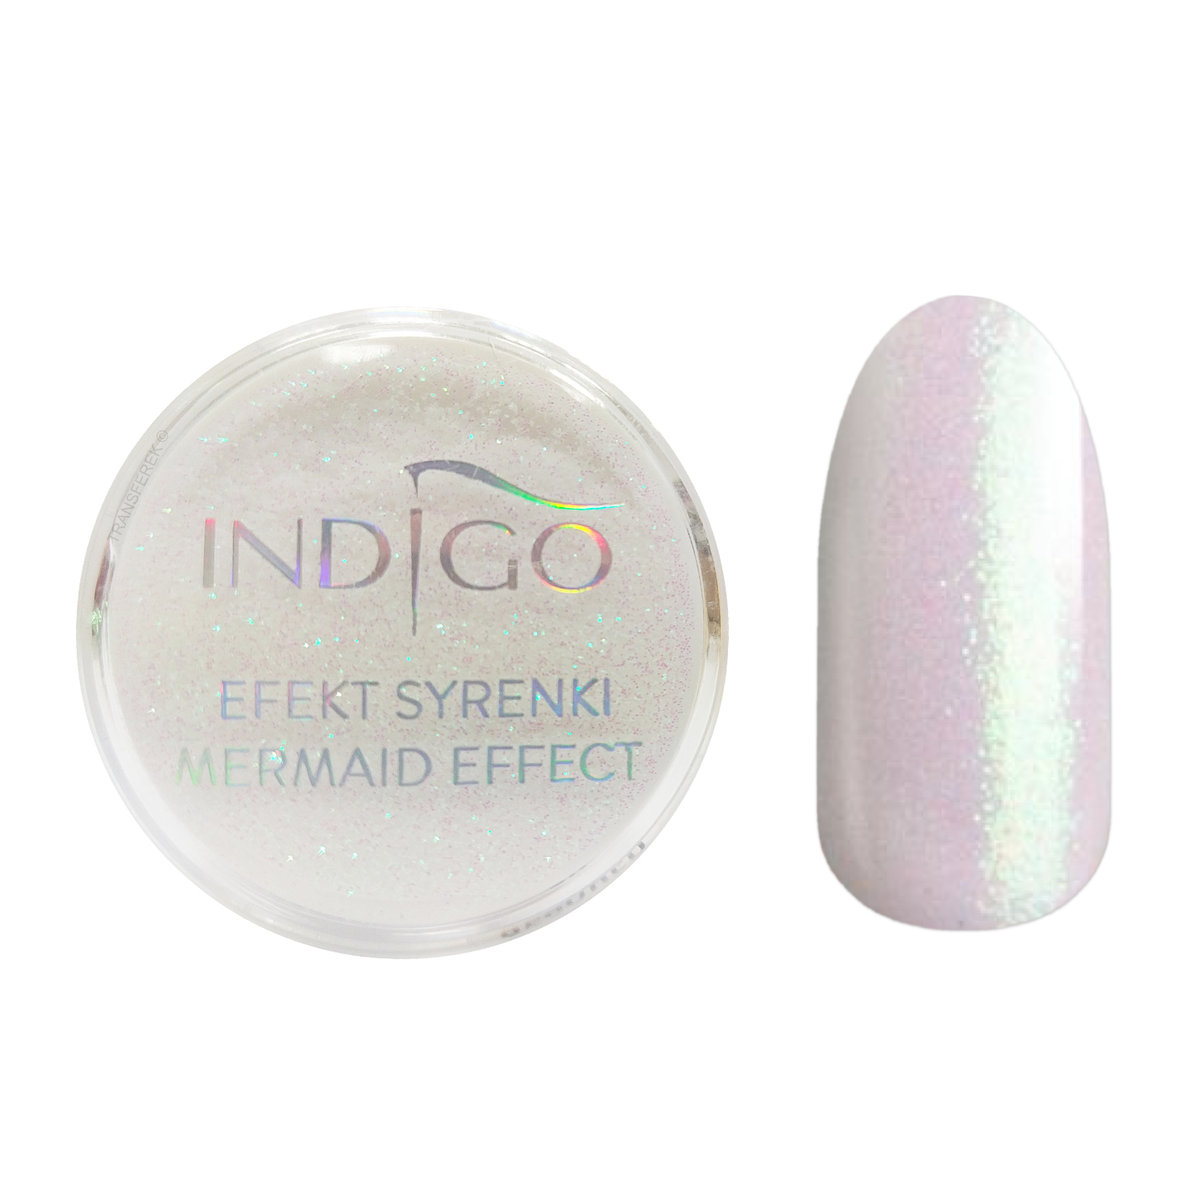 Indigo Pyłek Mermaid Effect Efekt Syrenki Emerald